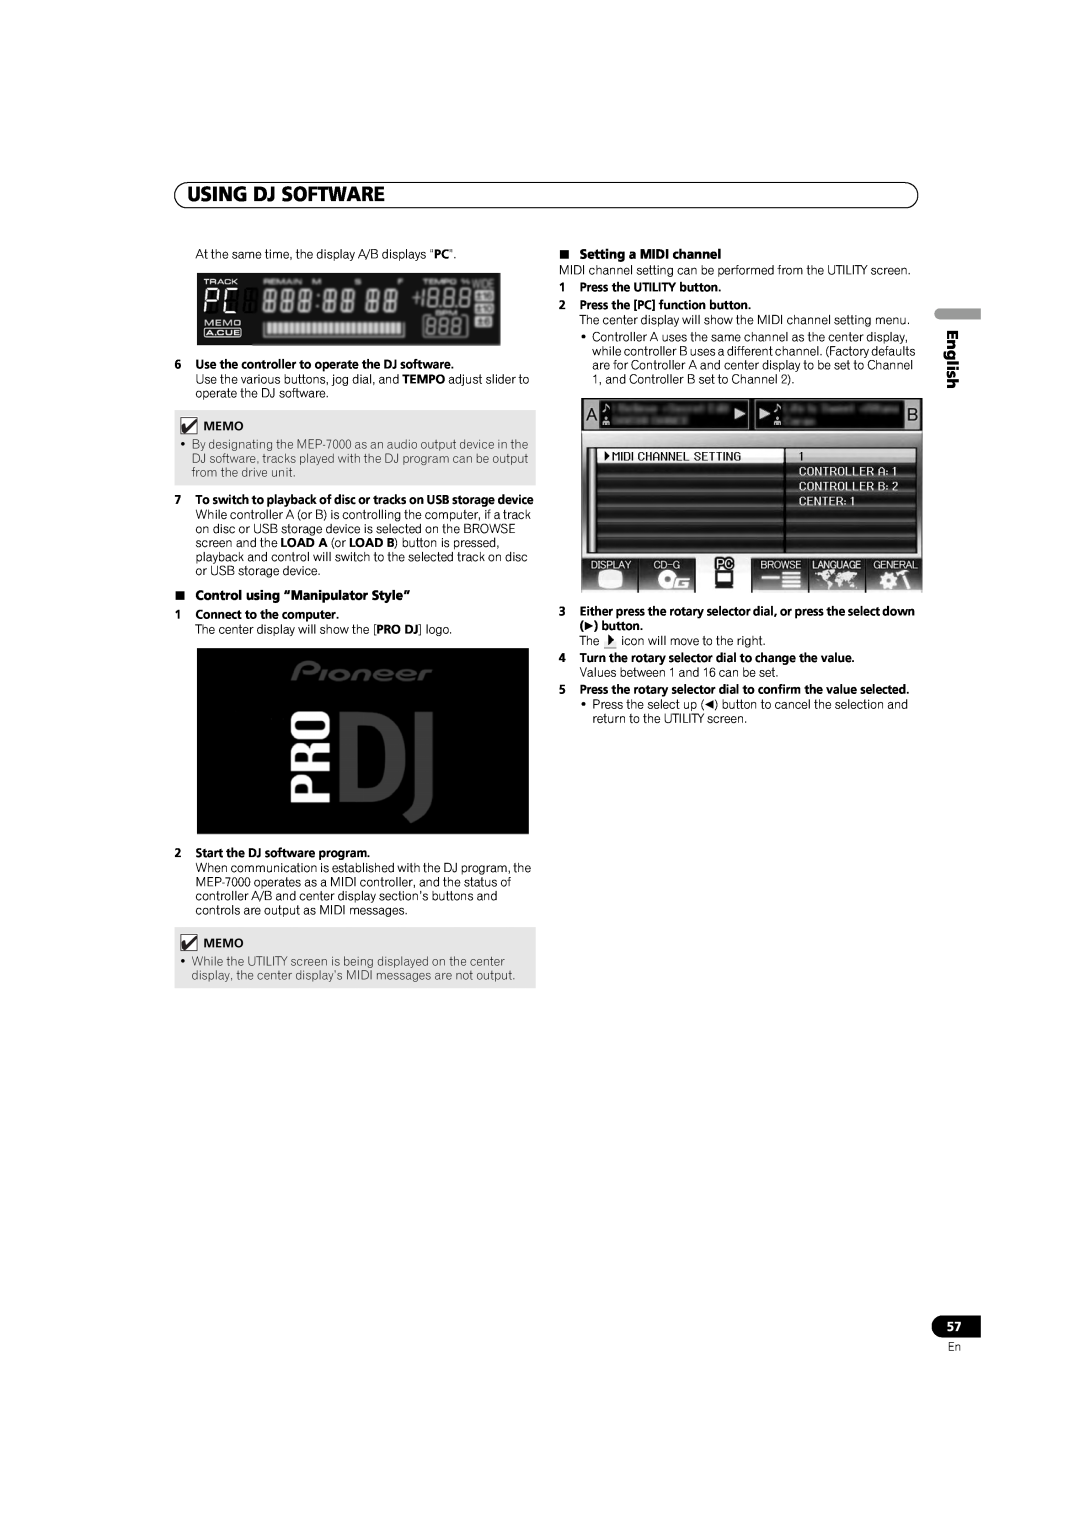 Pioneer MEP-7000 Using Dj Software, English, Control using “Manipulator Style”, Setting a MIDI channel 